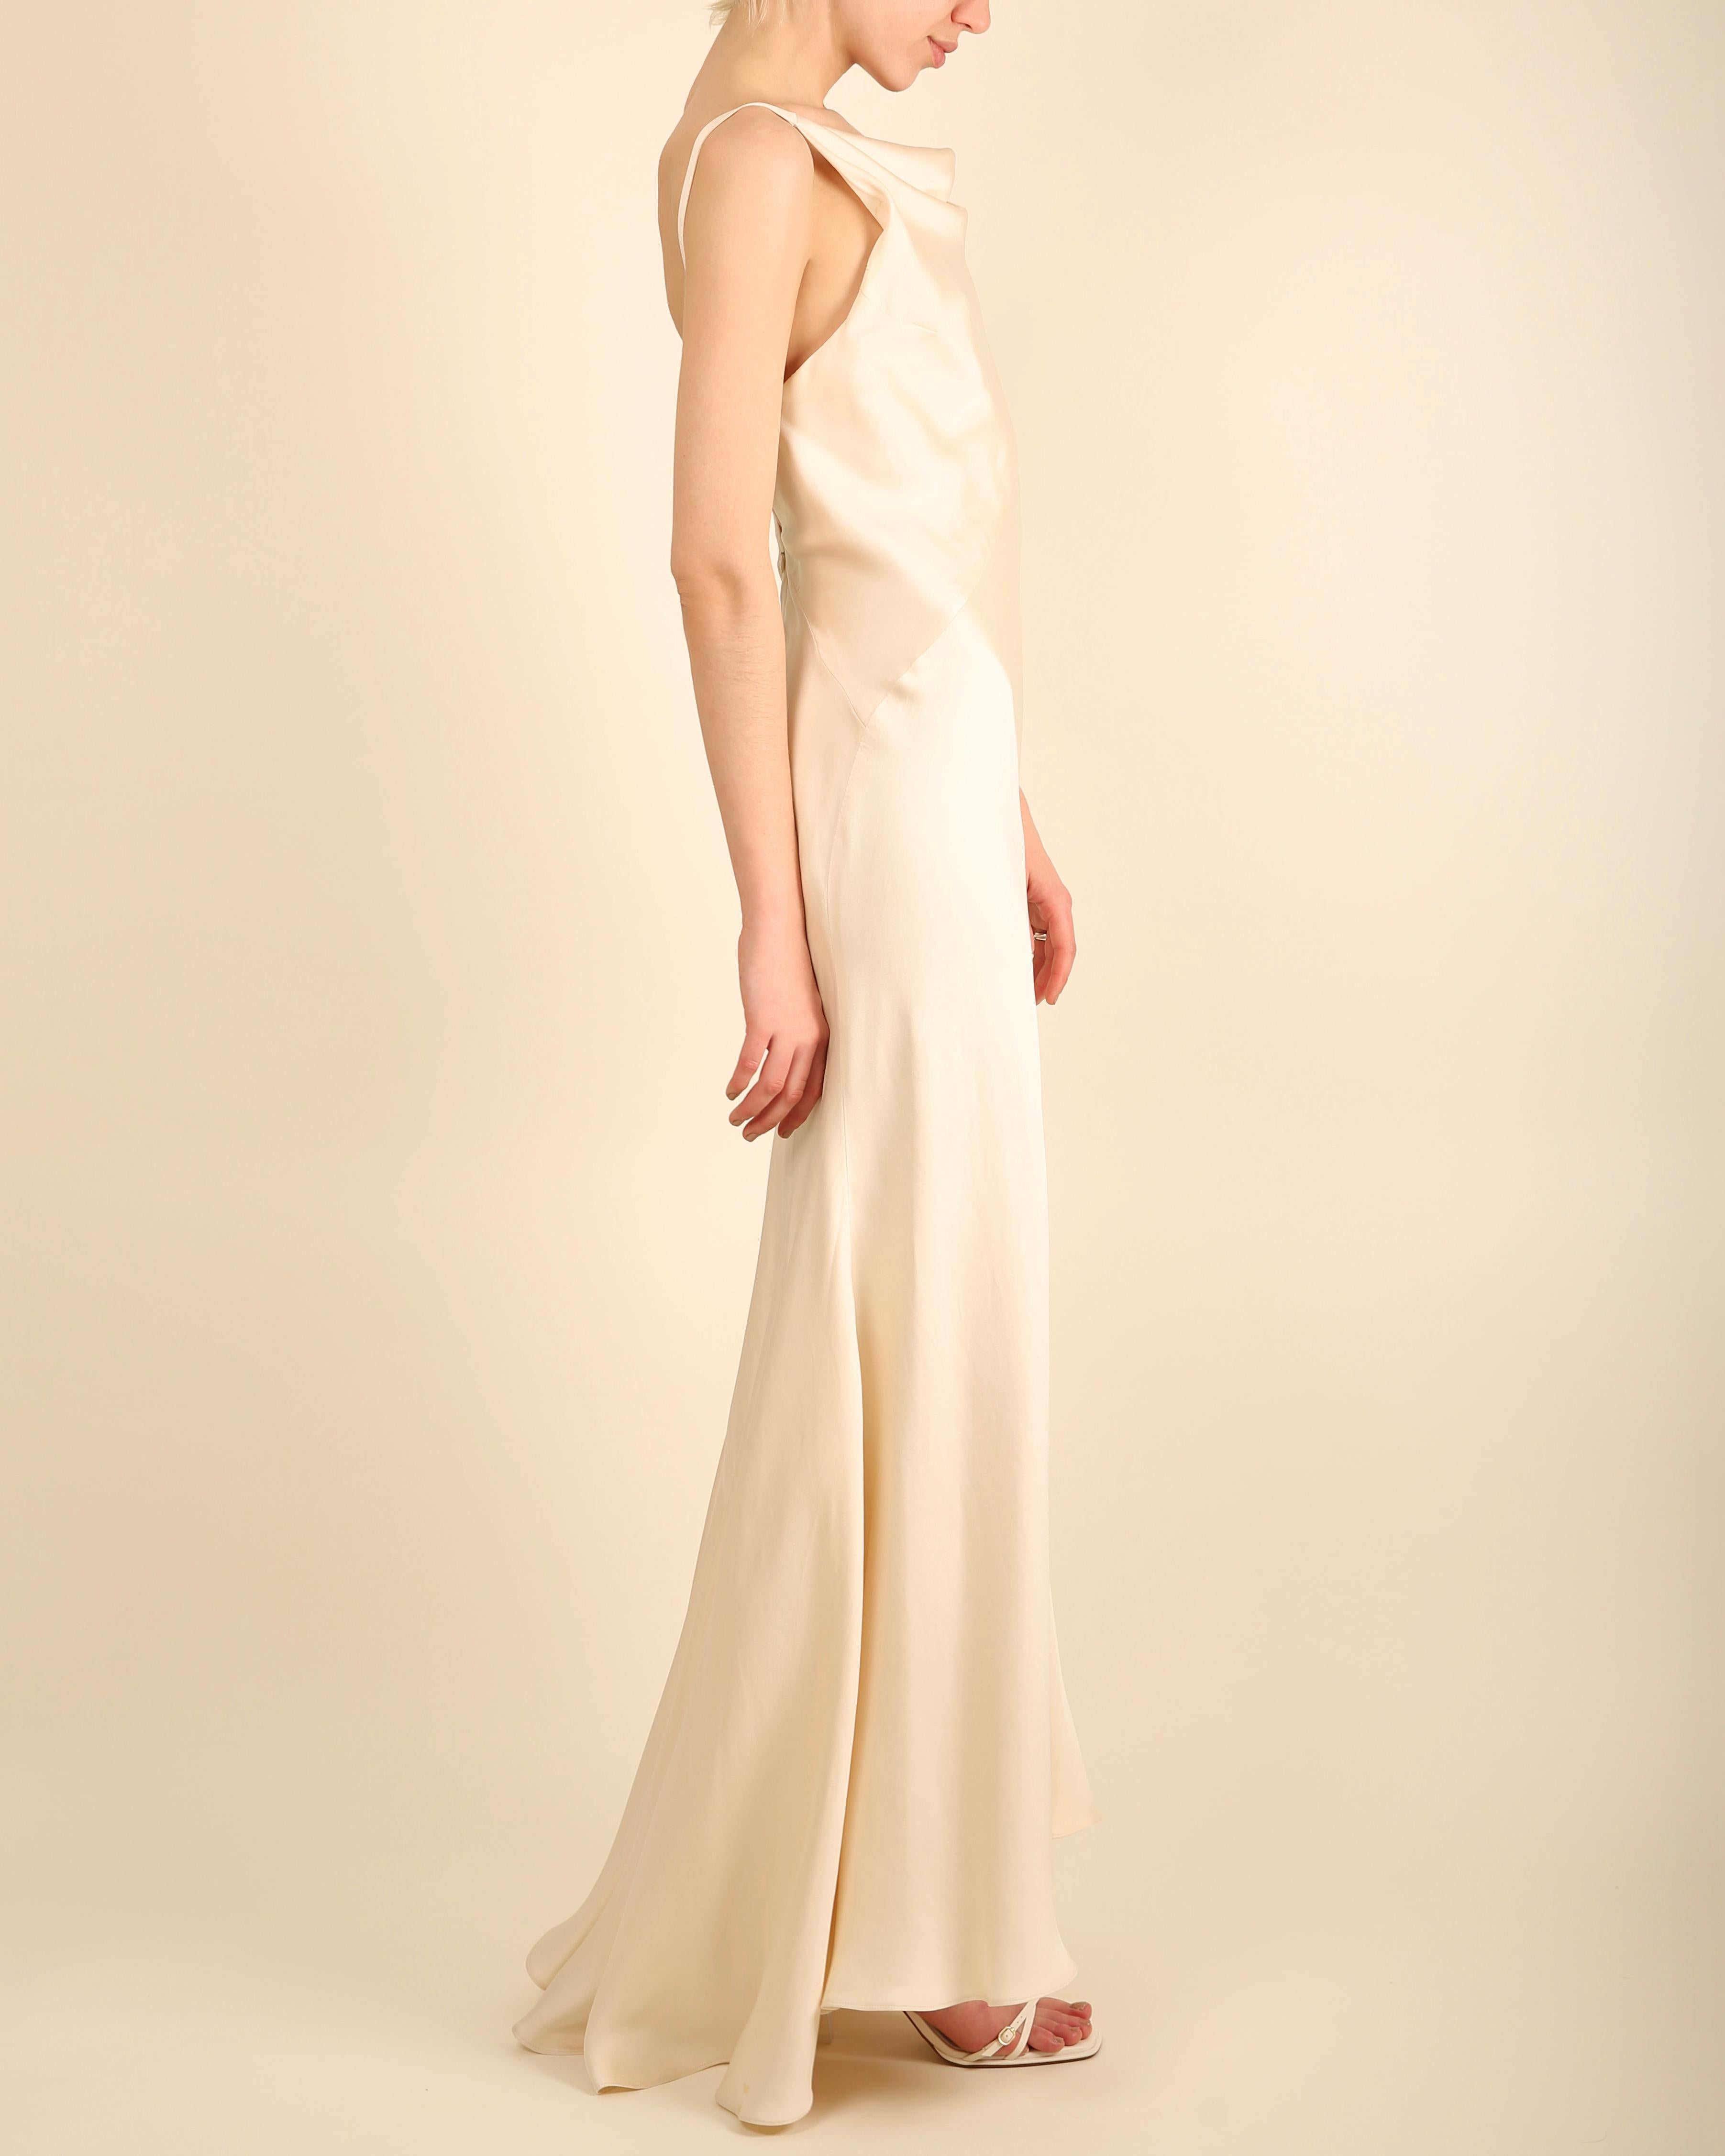 Beige Ralph Lauren champagne bias cut backless silk slip style backless gown dress